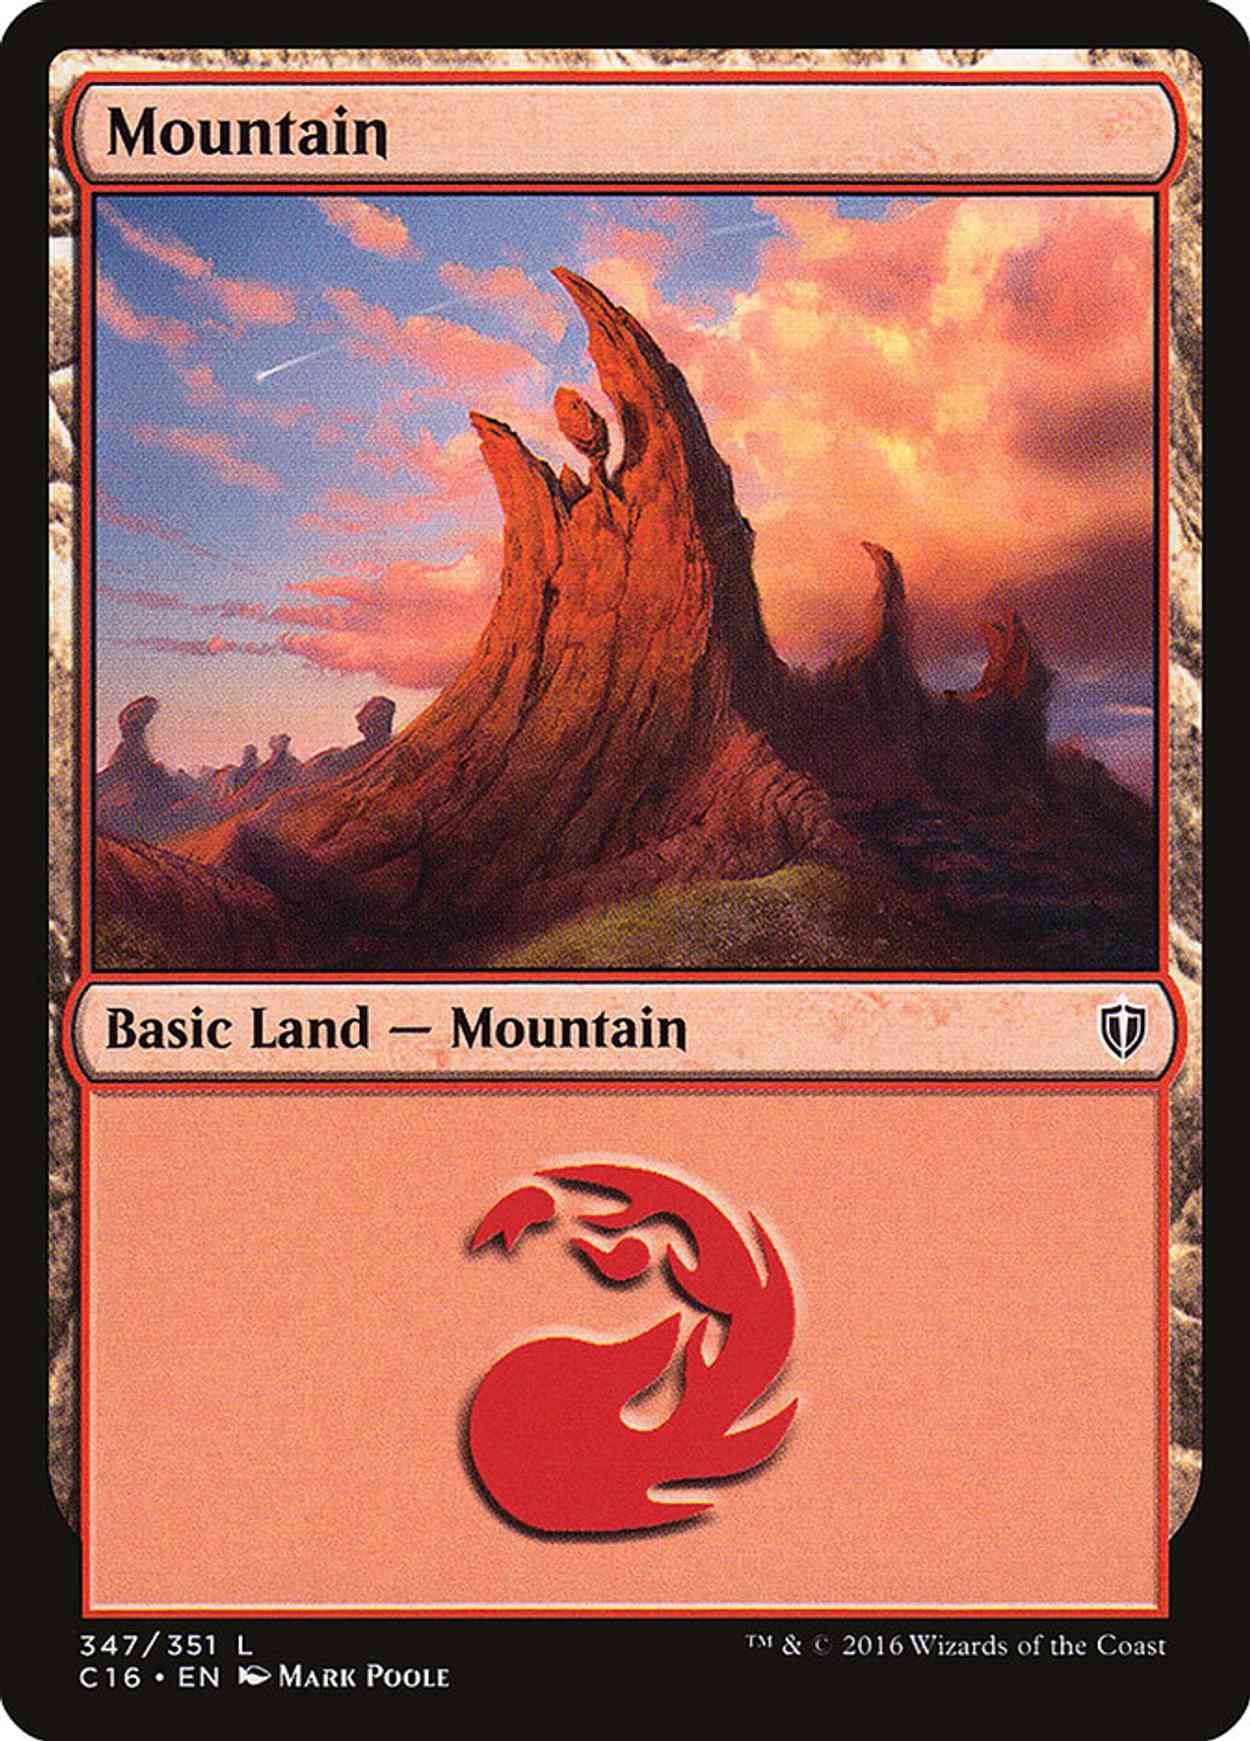 Mountain (347) magic card front